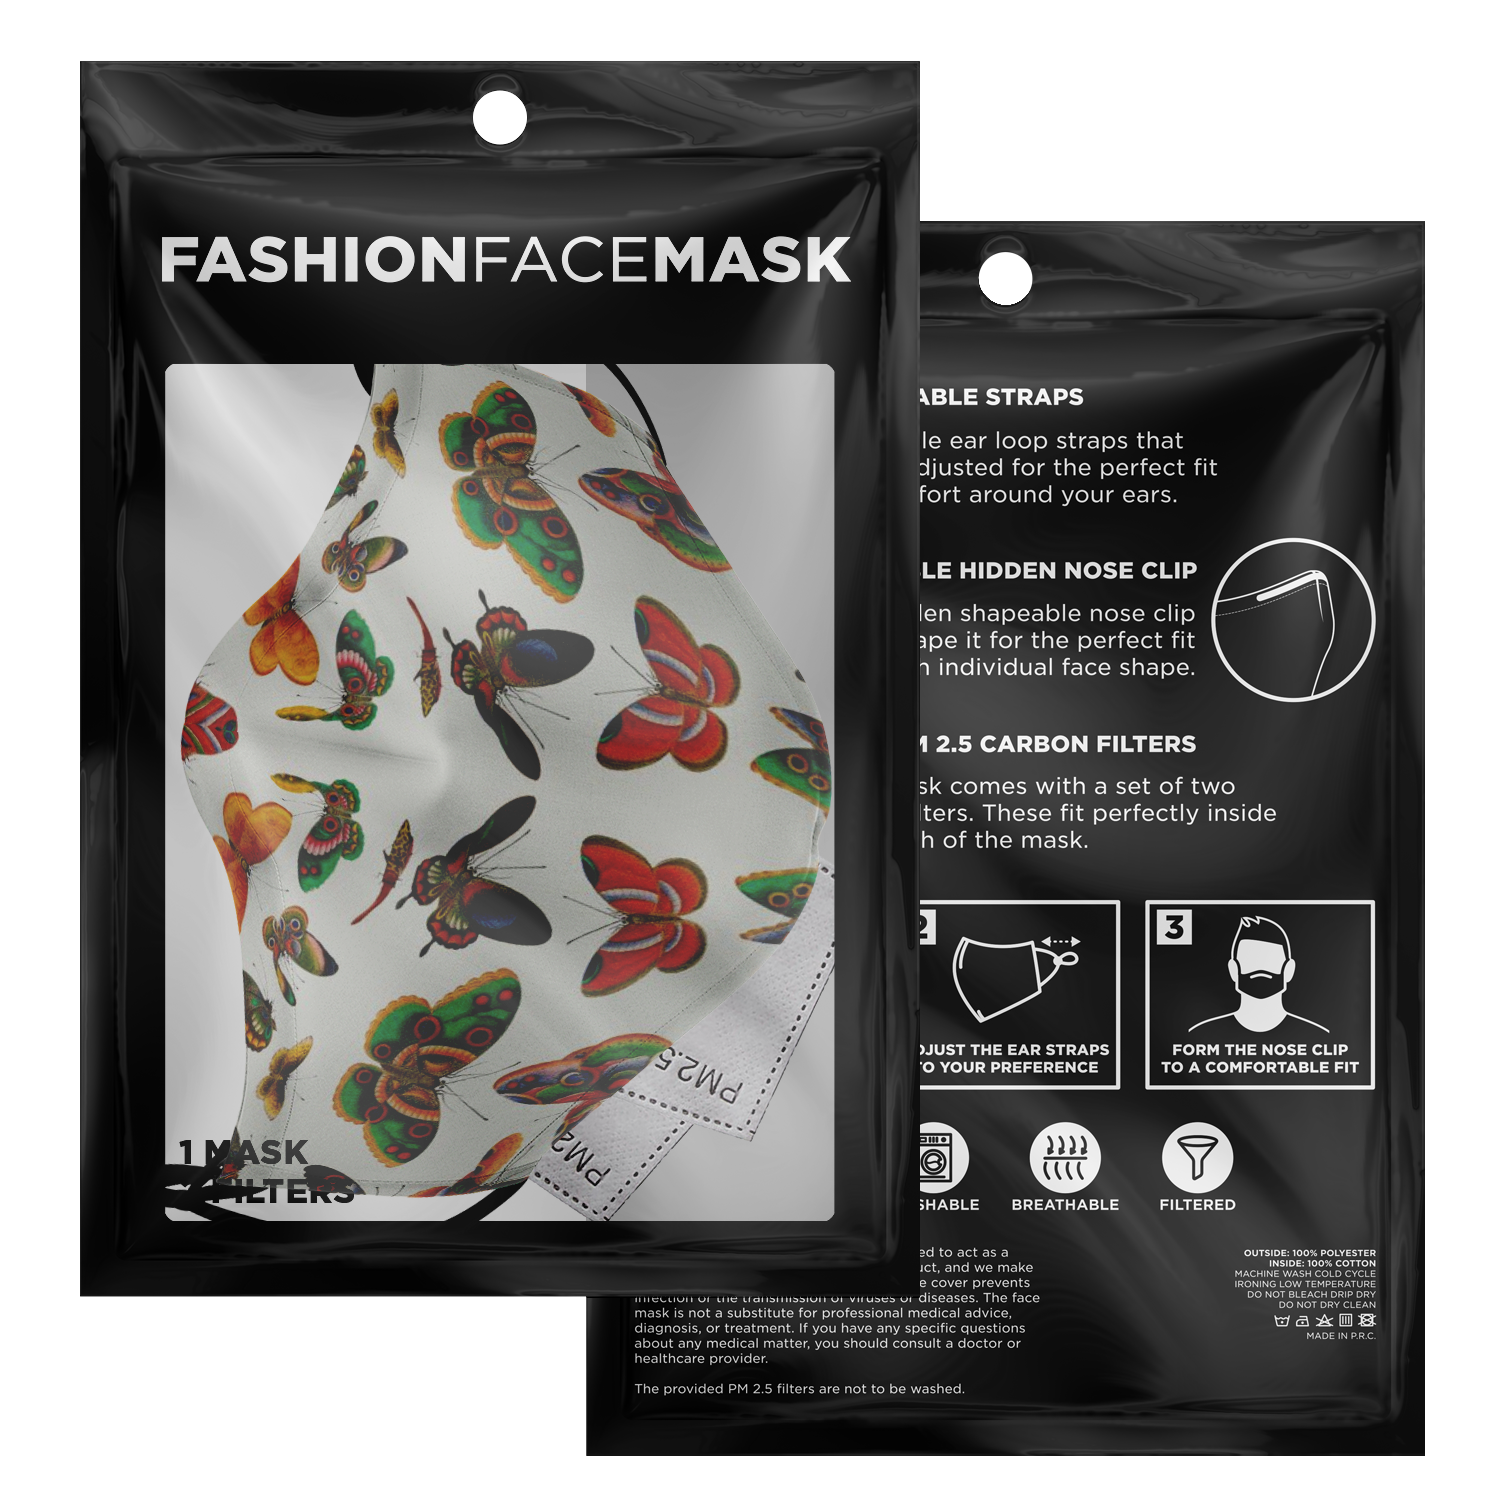 Butterfly Face Mask #2